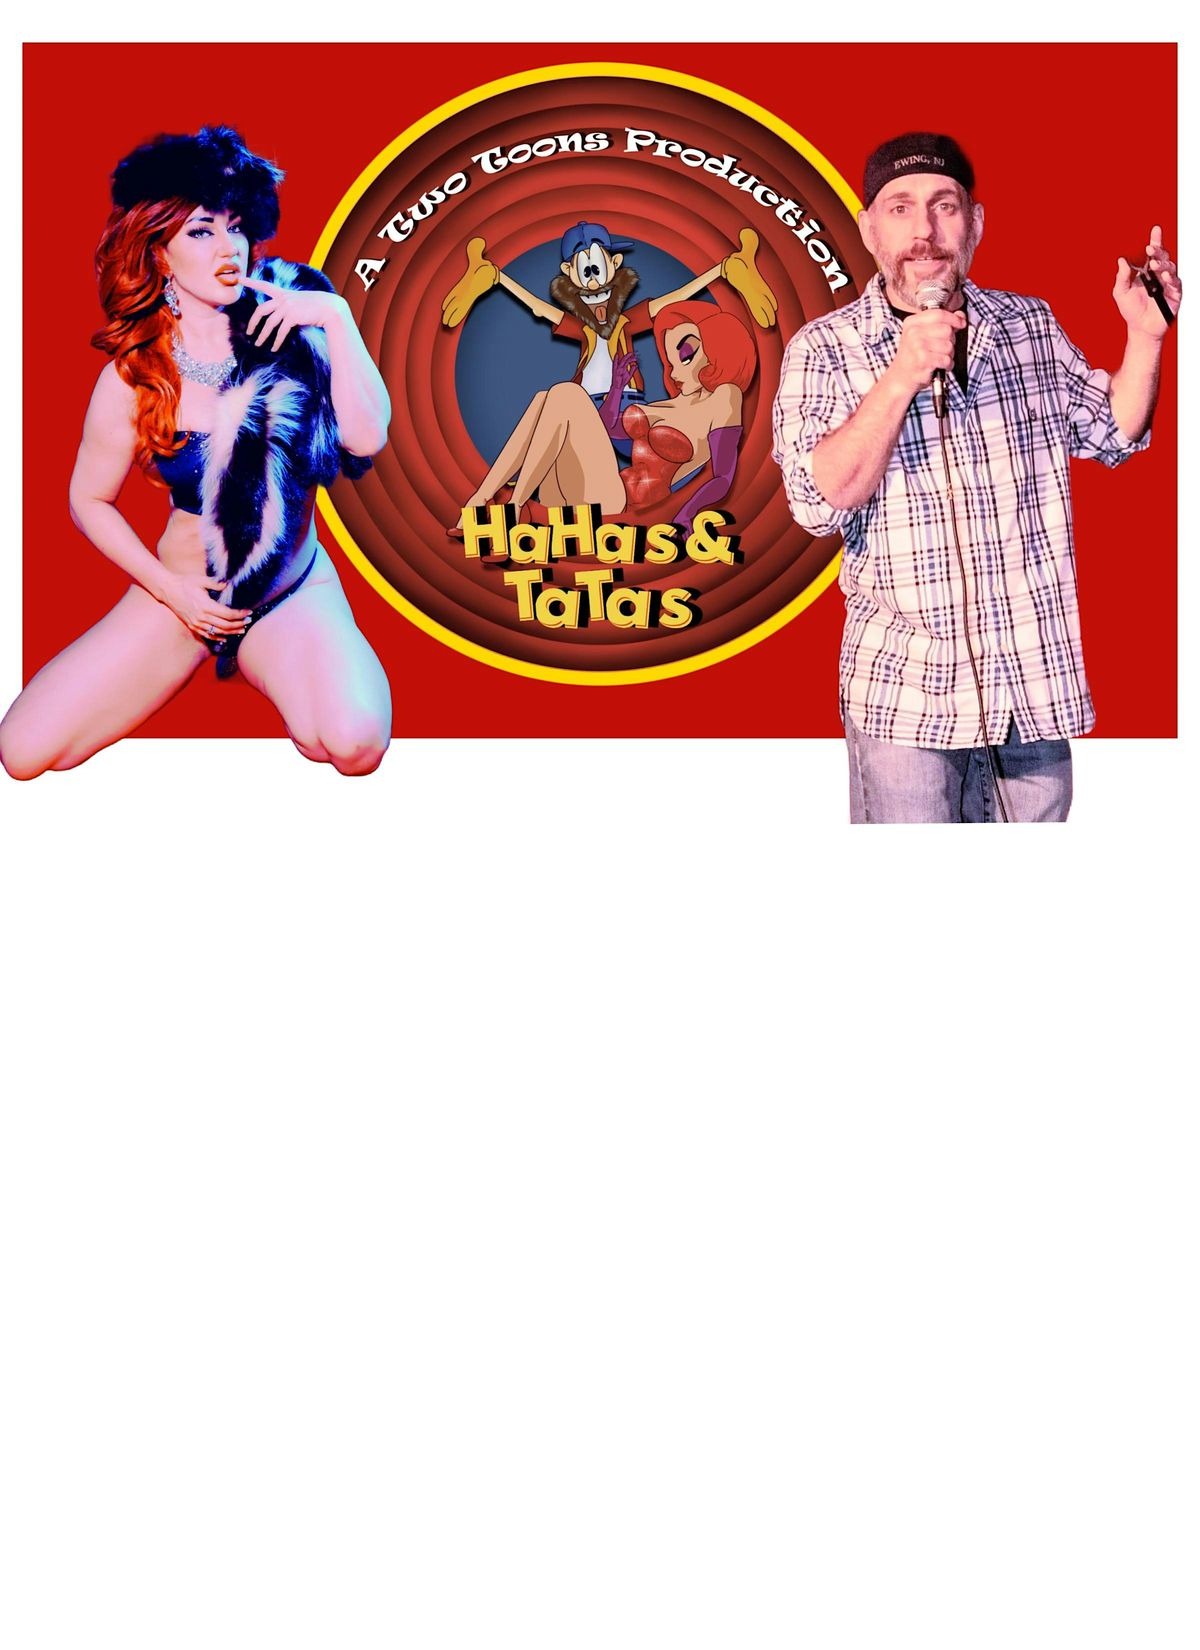 Haha & Tatas Burlesque Comedy Revue (NEW JERSEY)